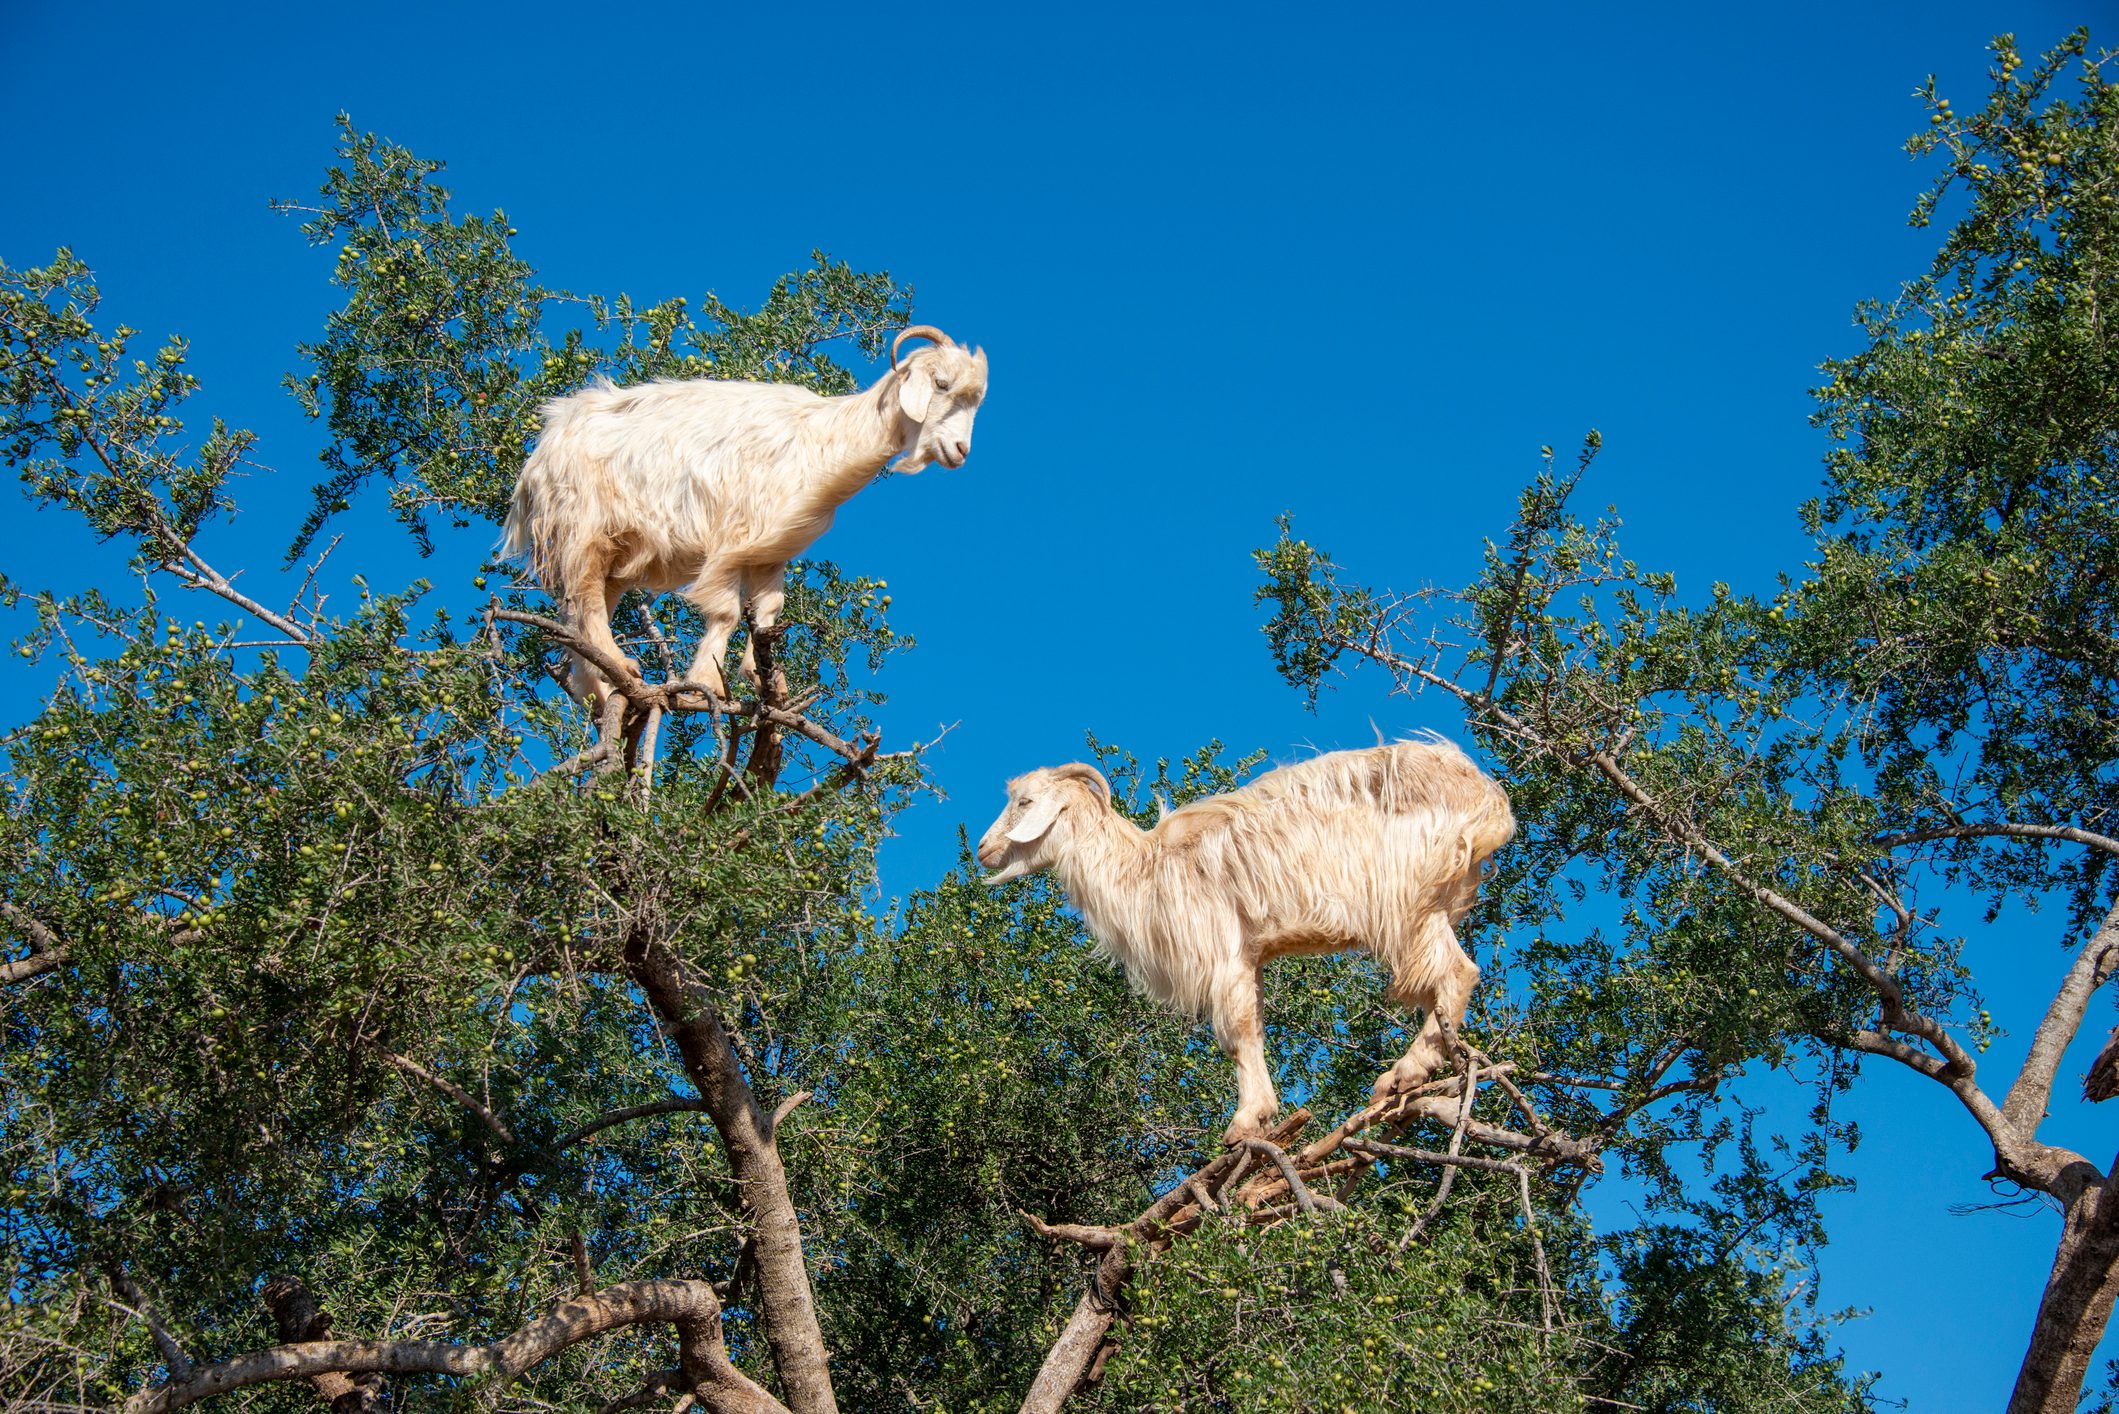 Goats graze in an argan tree - Morocco